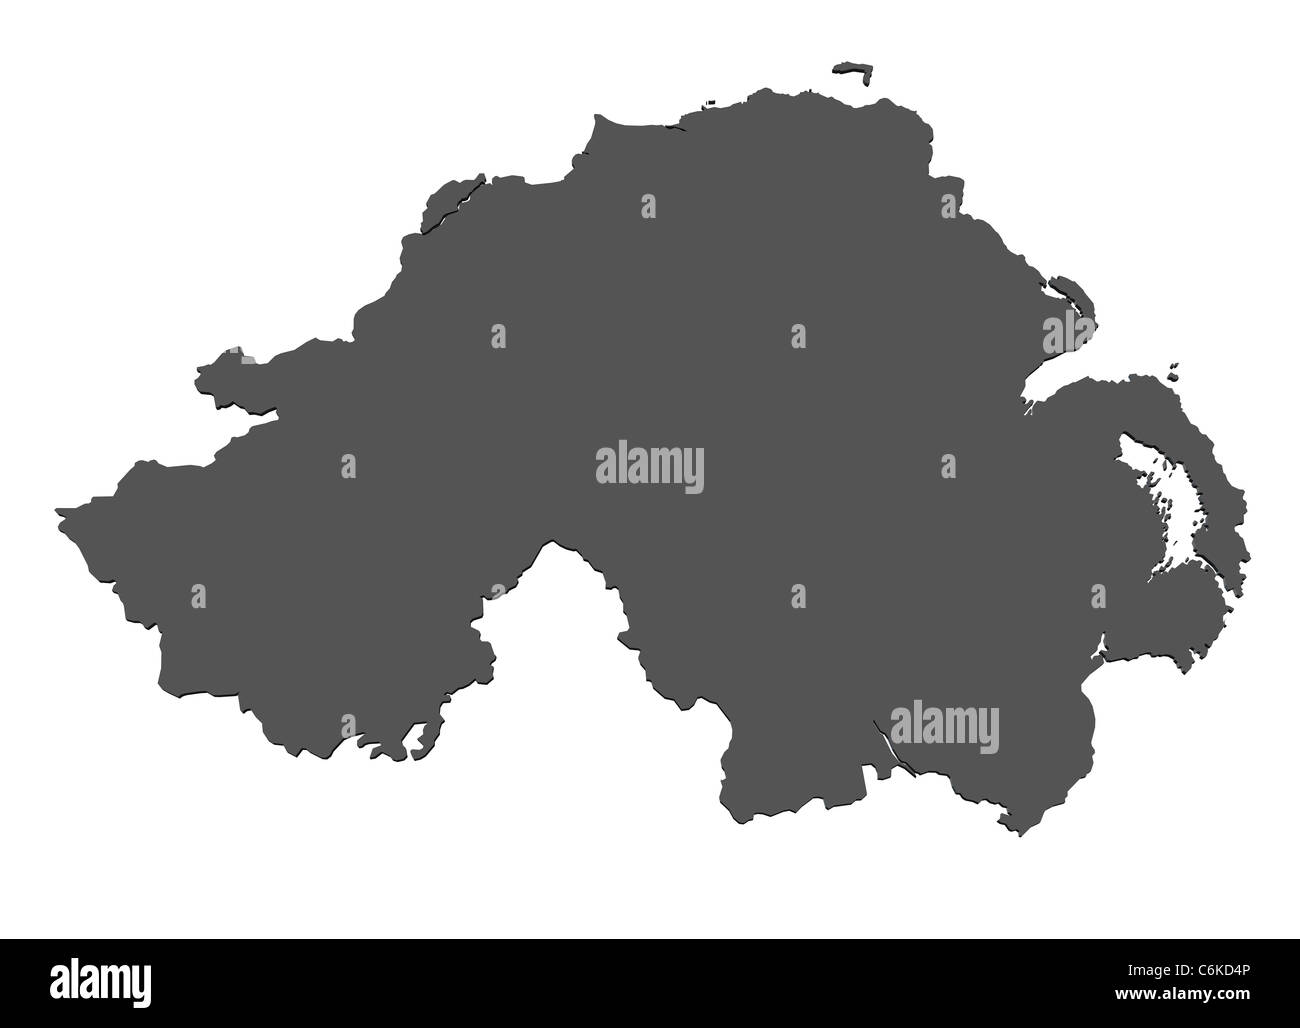 Isolated map of Ireland Stock Photo